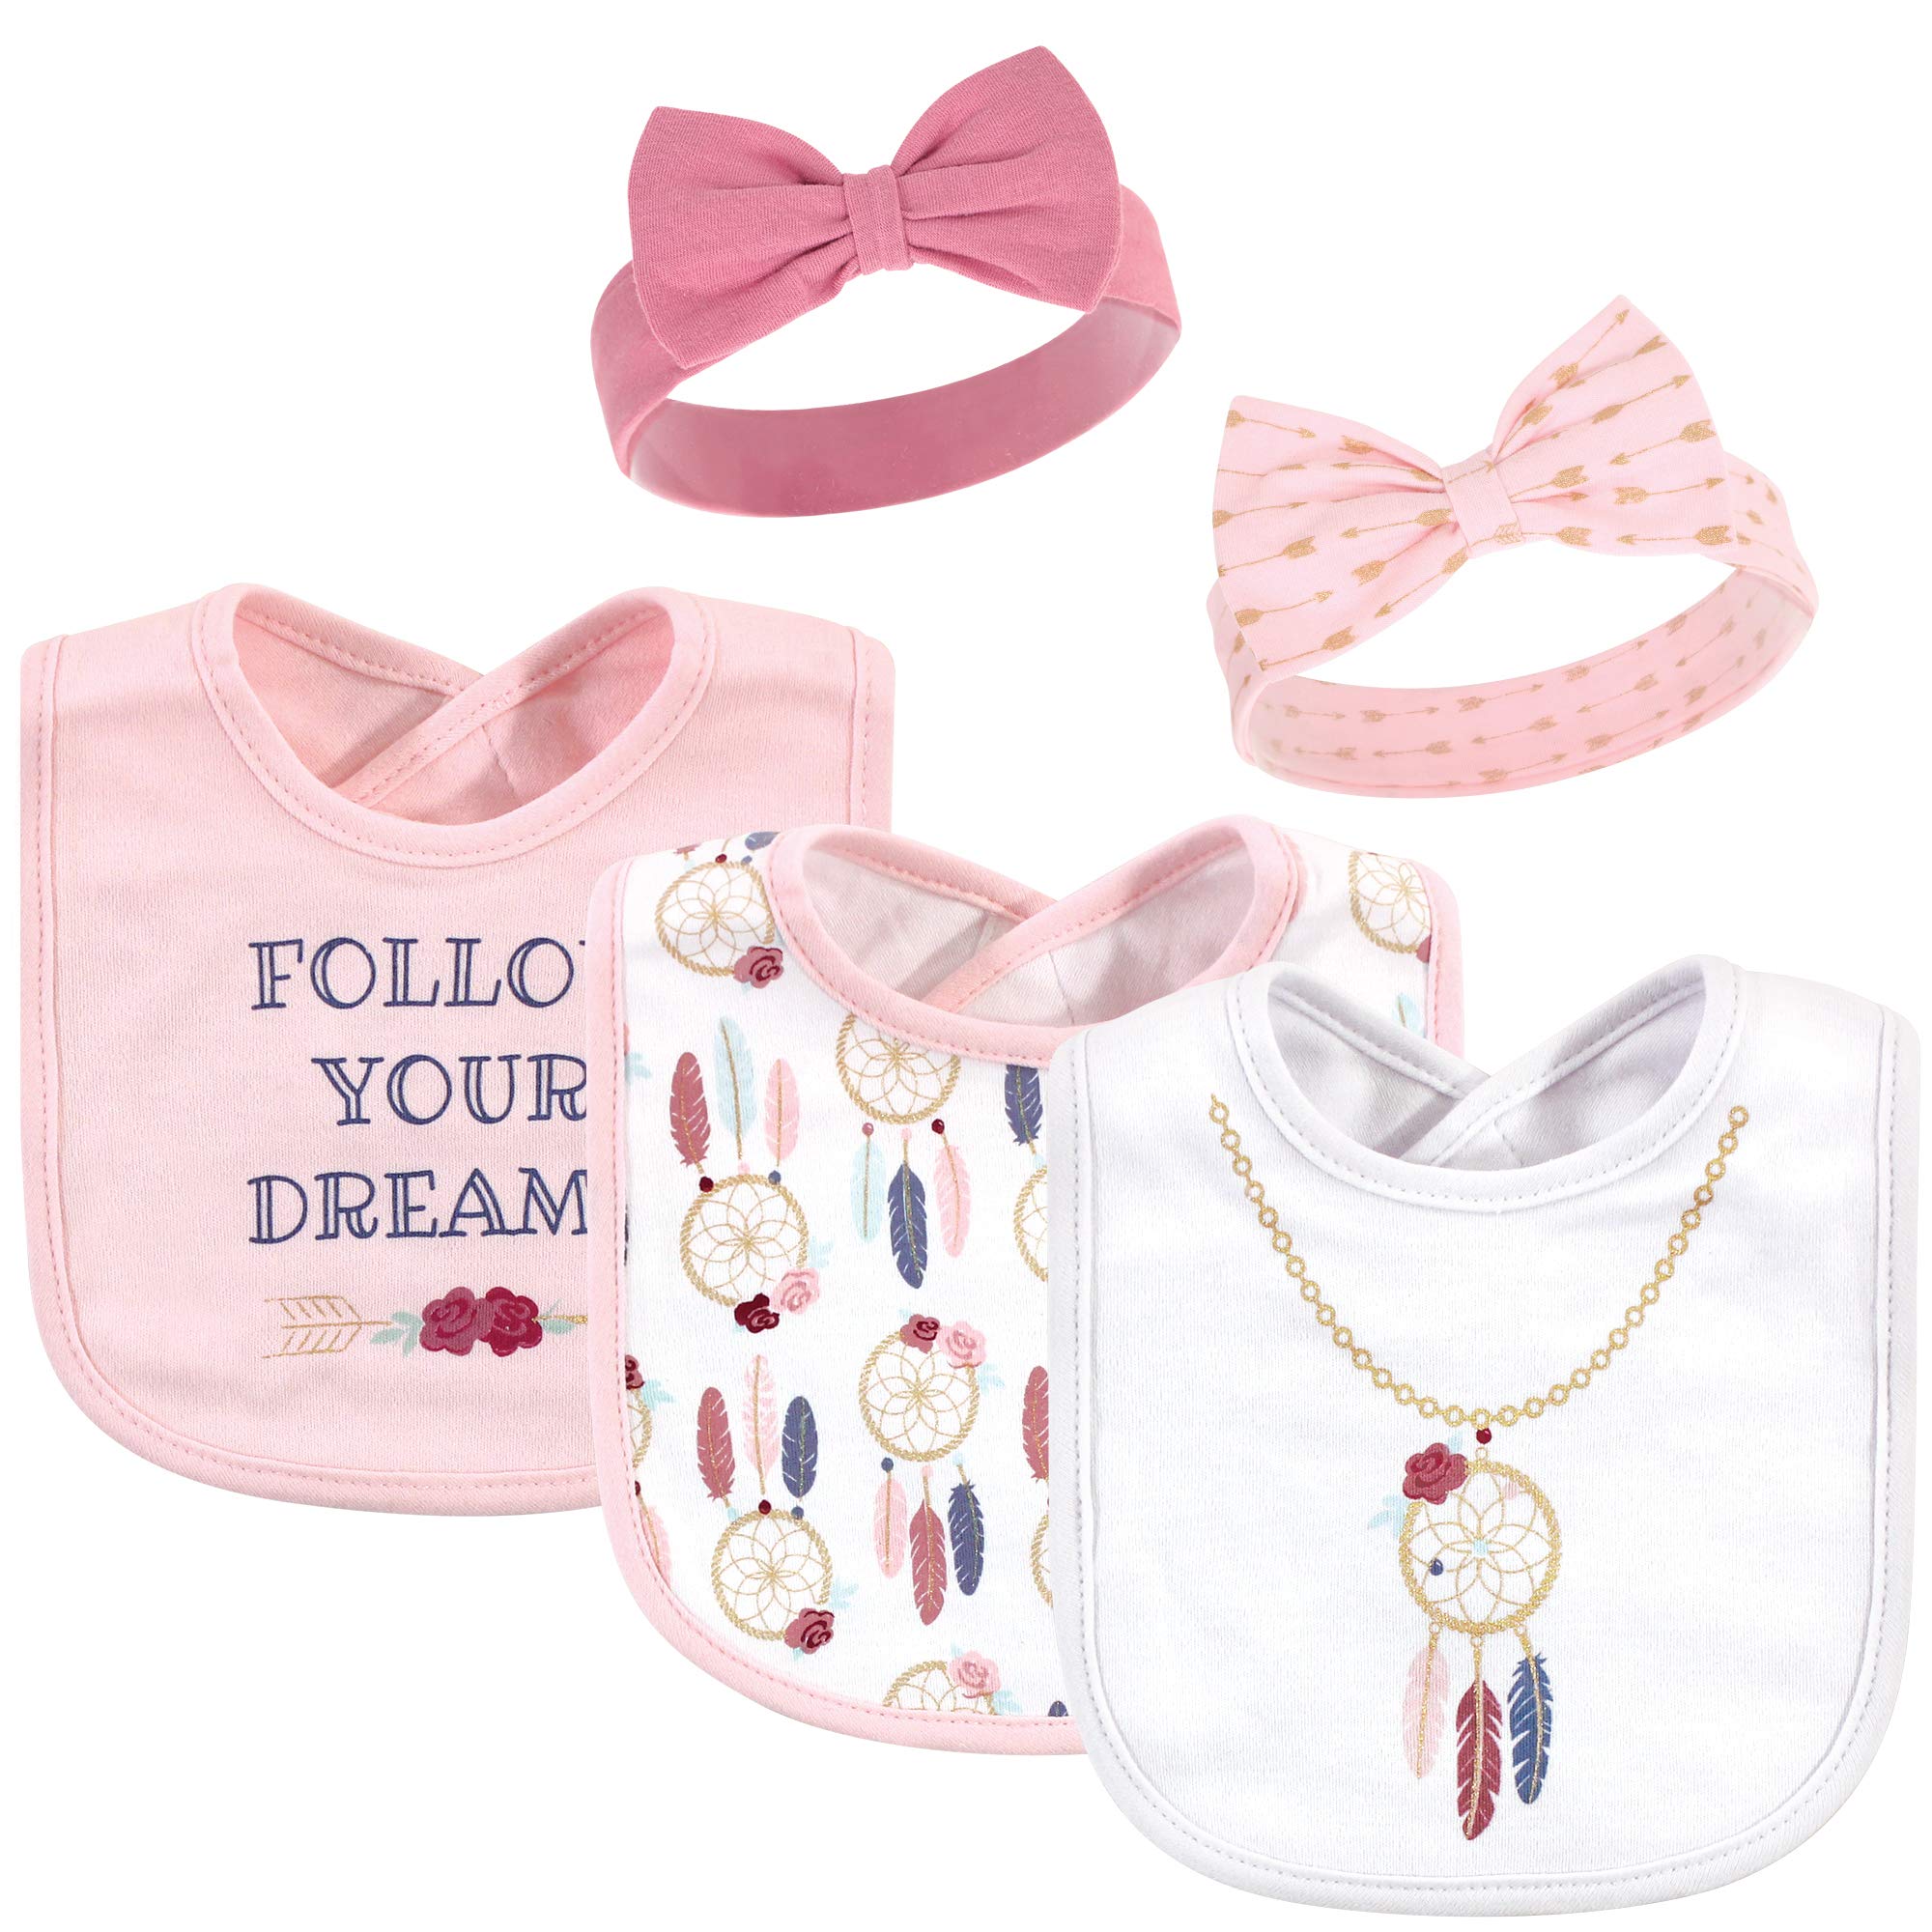 Little Treasure Baby Girls' Cotton Bib and Headband Set